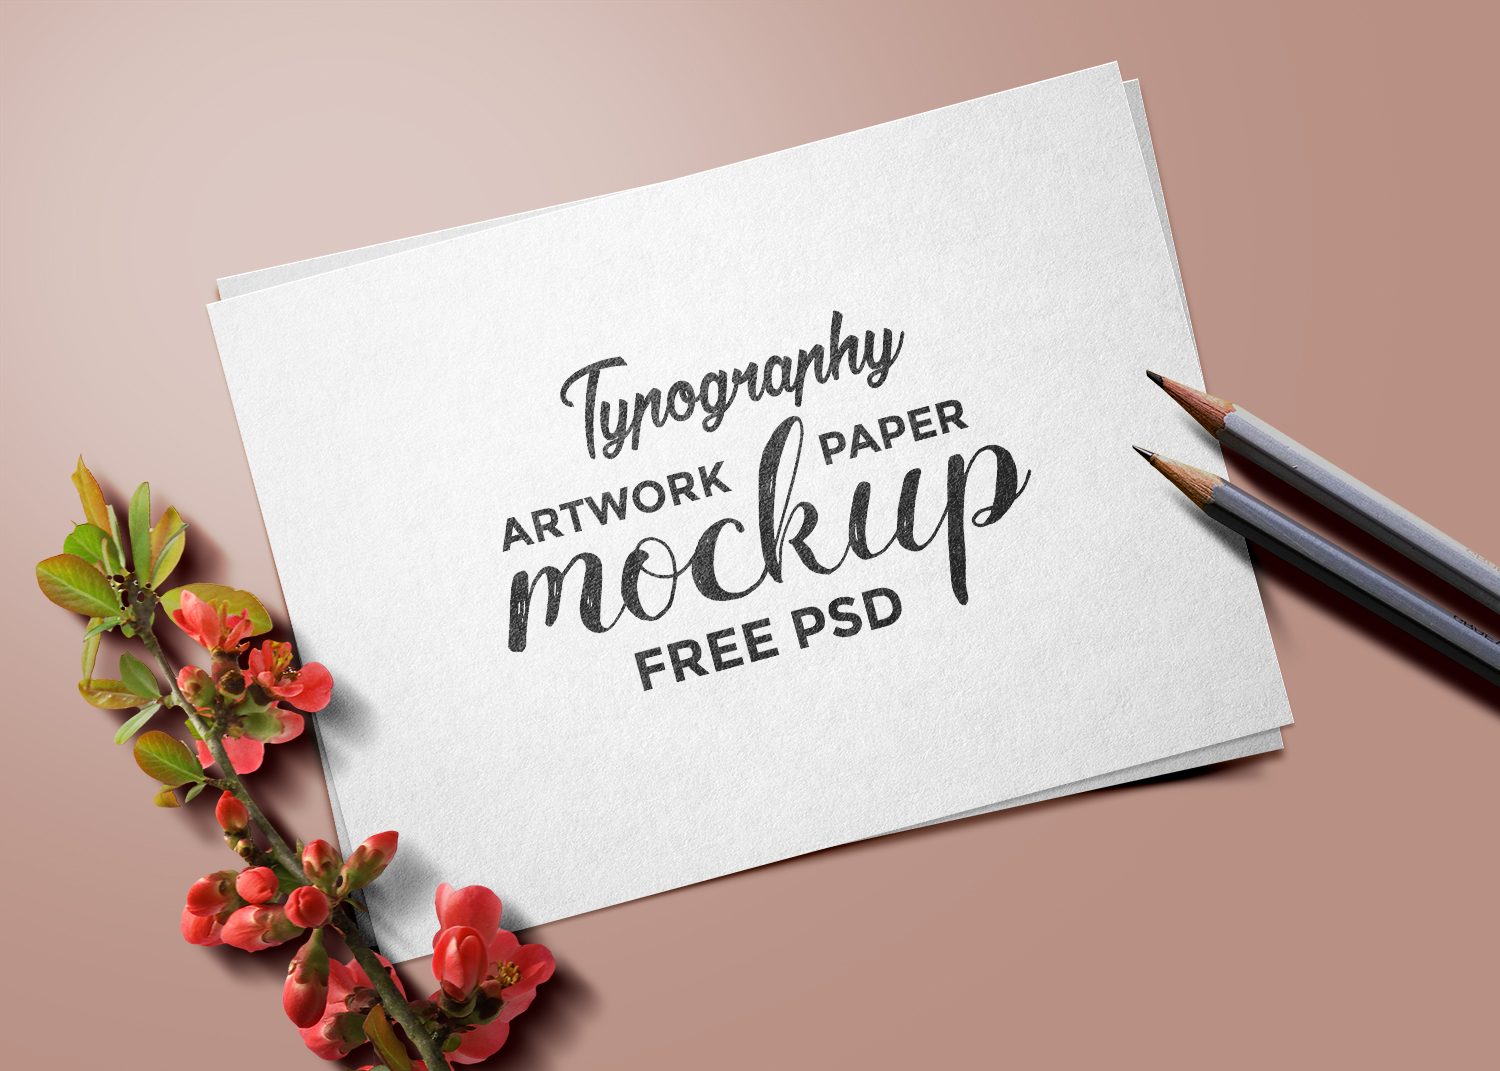 Typography Artwork Free Paper Mockup PSD